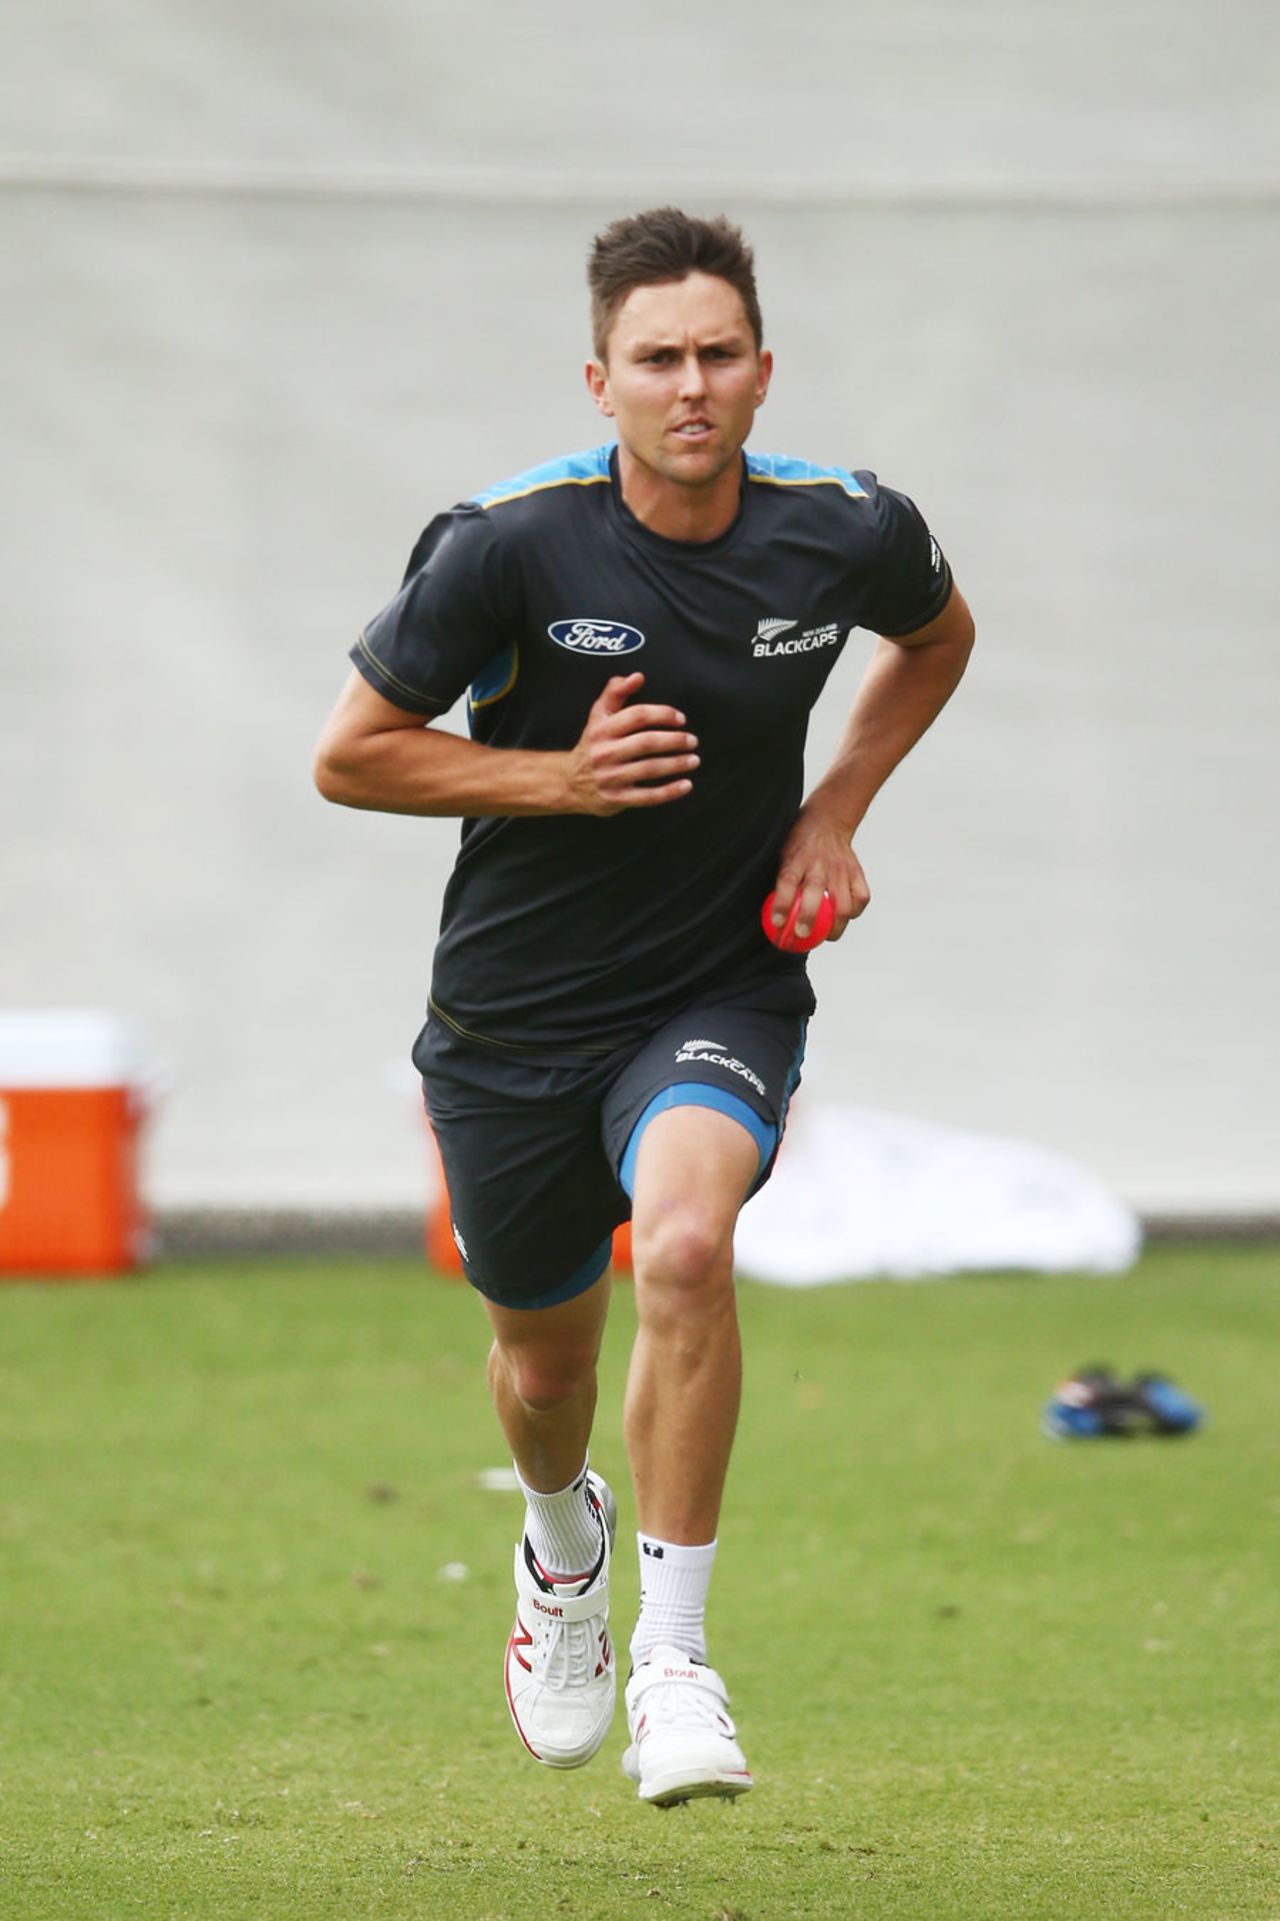 Trent Boult runs in to bowl at nets, Adelaide, November 25, 2015